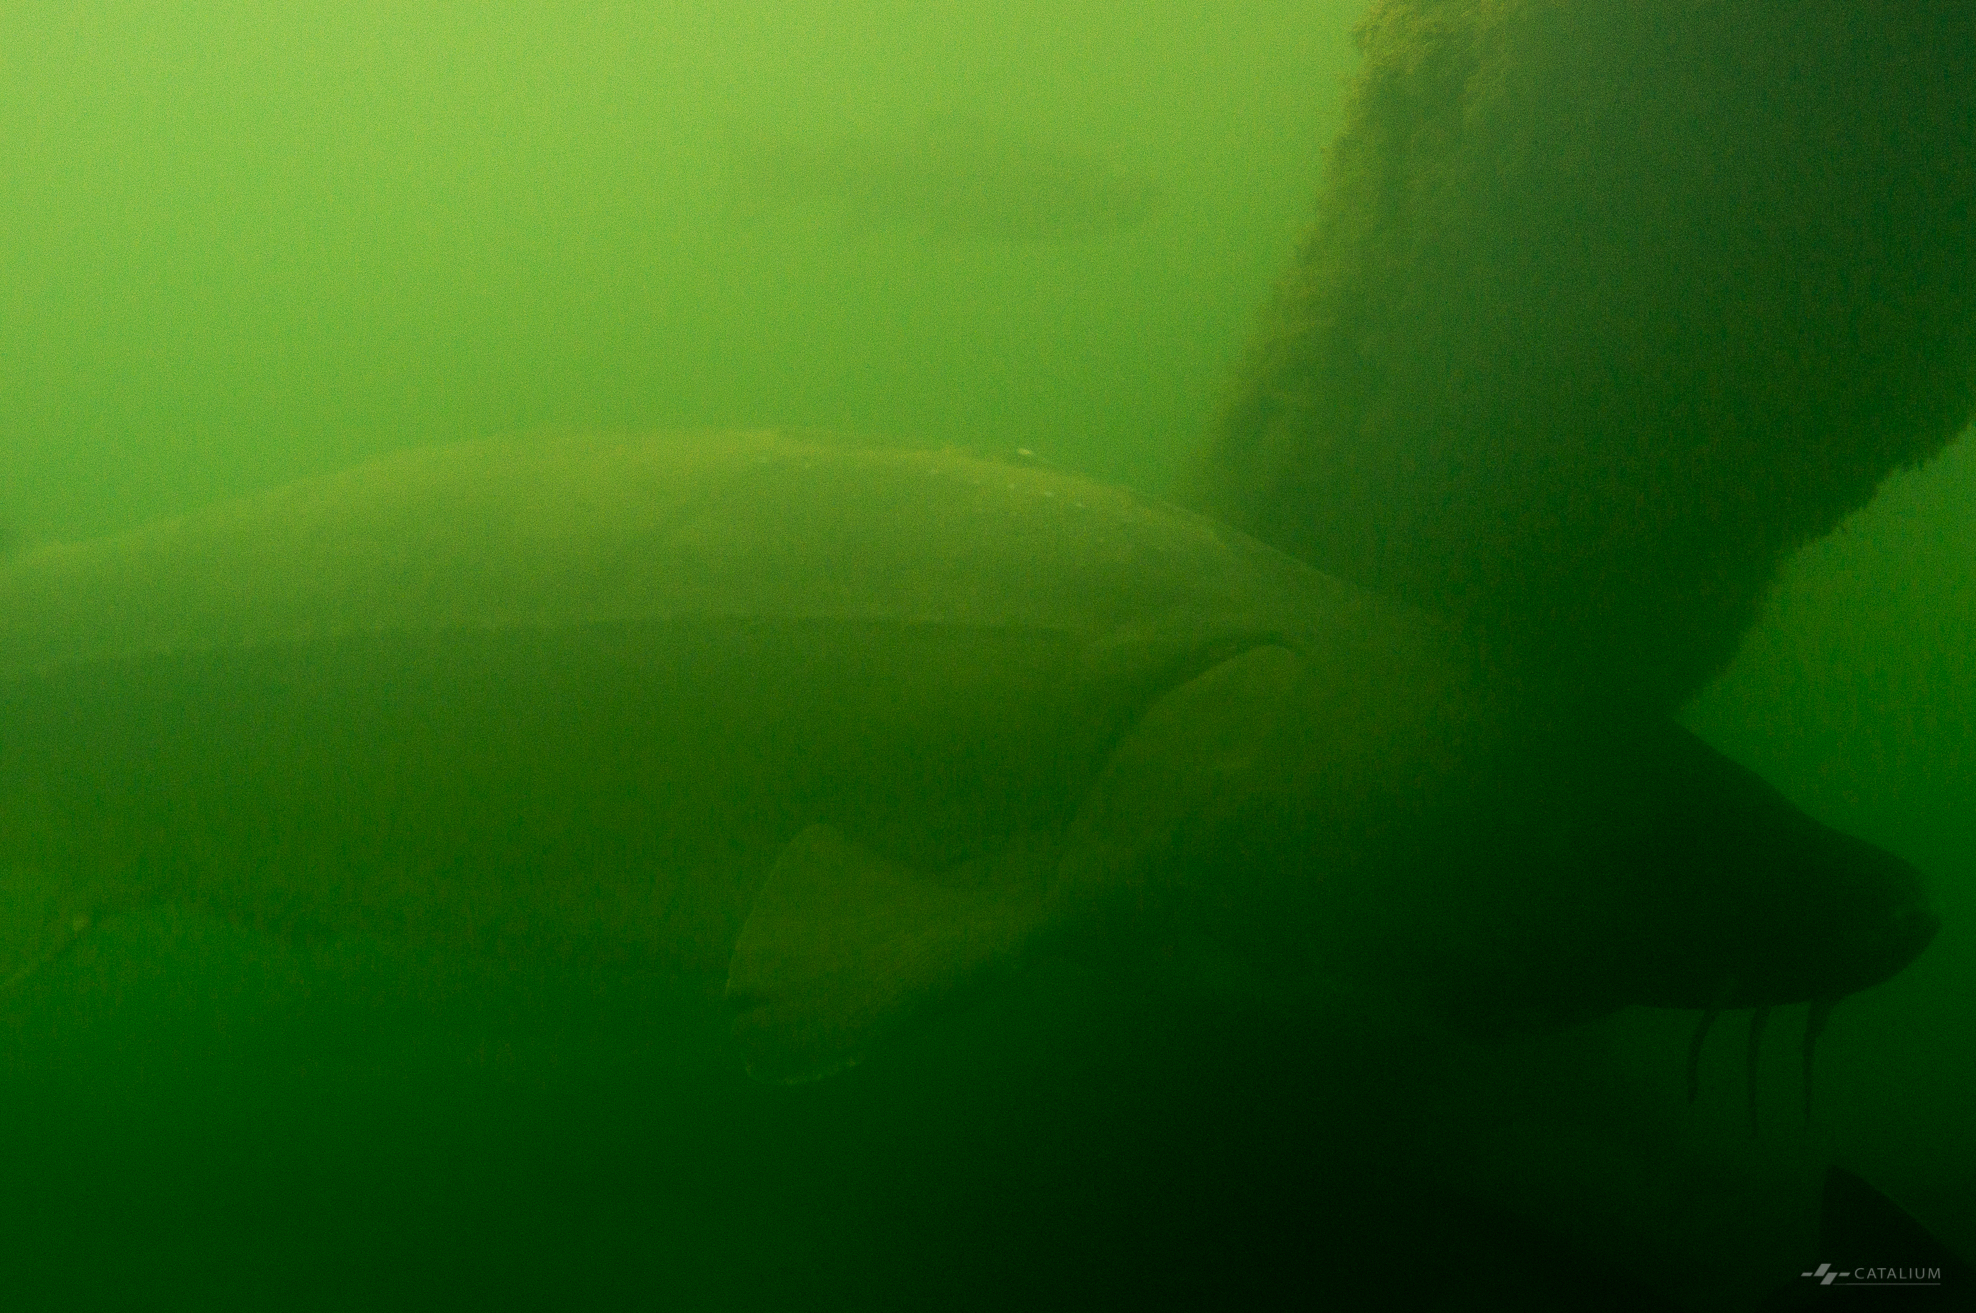 A giant sturgeon in the Bonneville Fish Hatchery